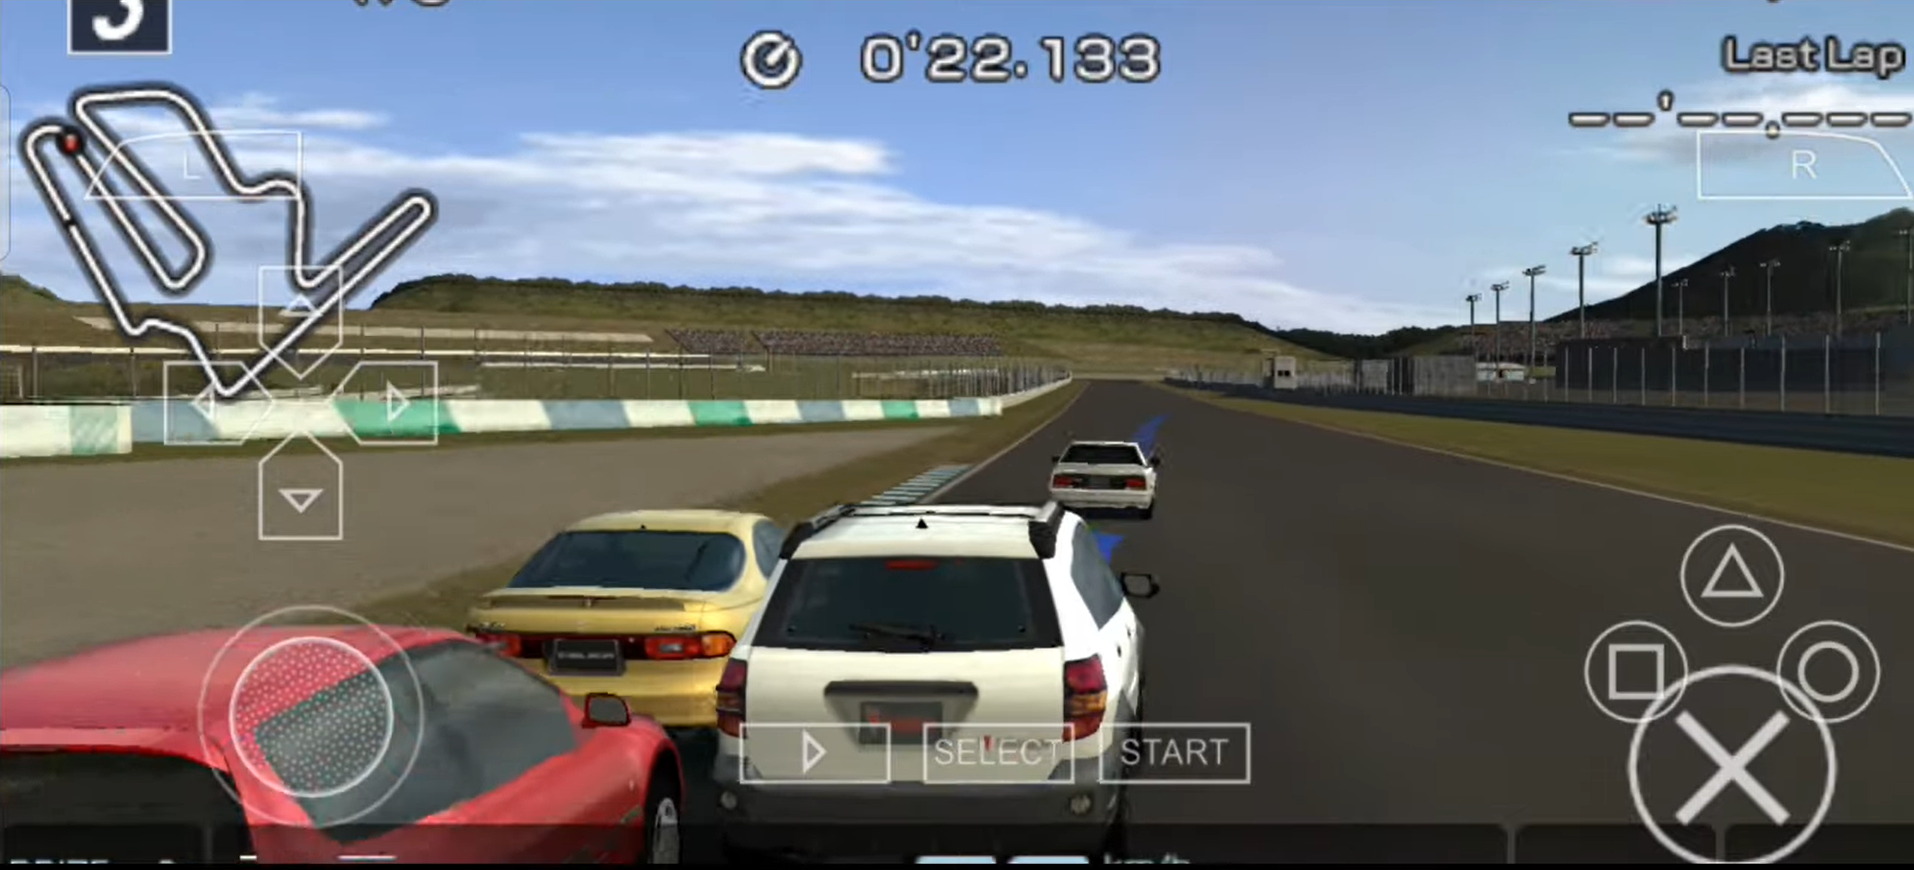 Gran Turismo - PSP, PPSSPP 1.10.3